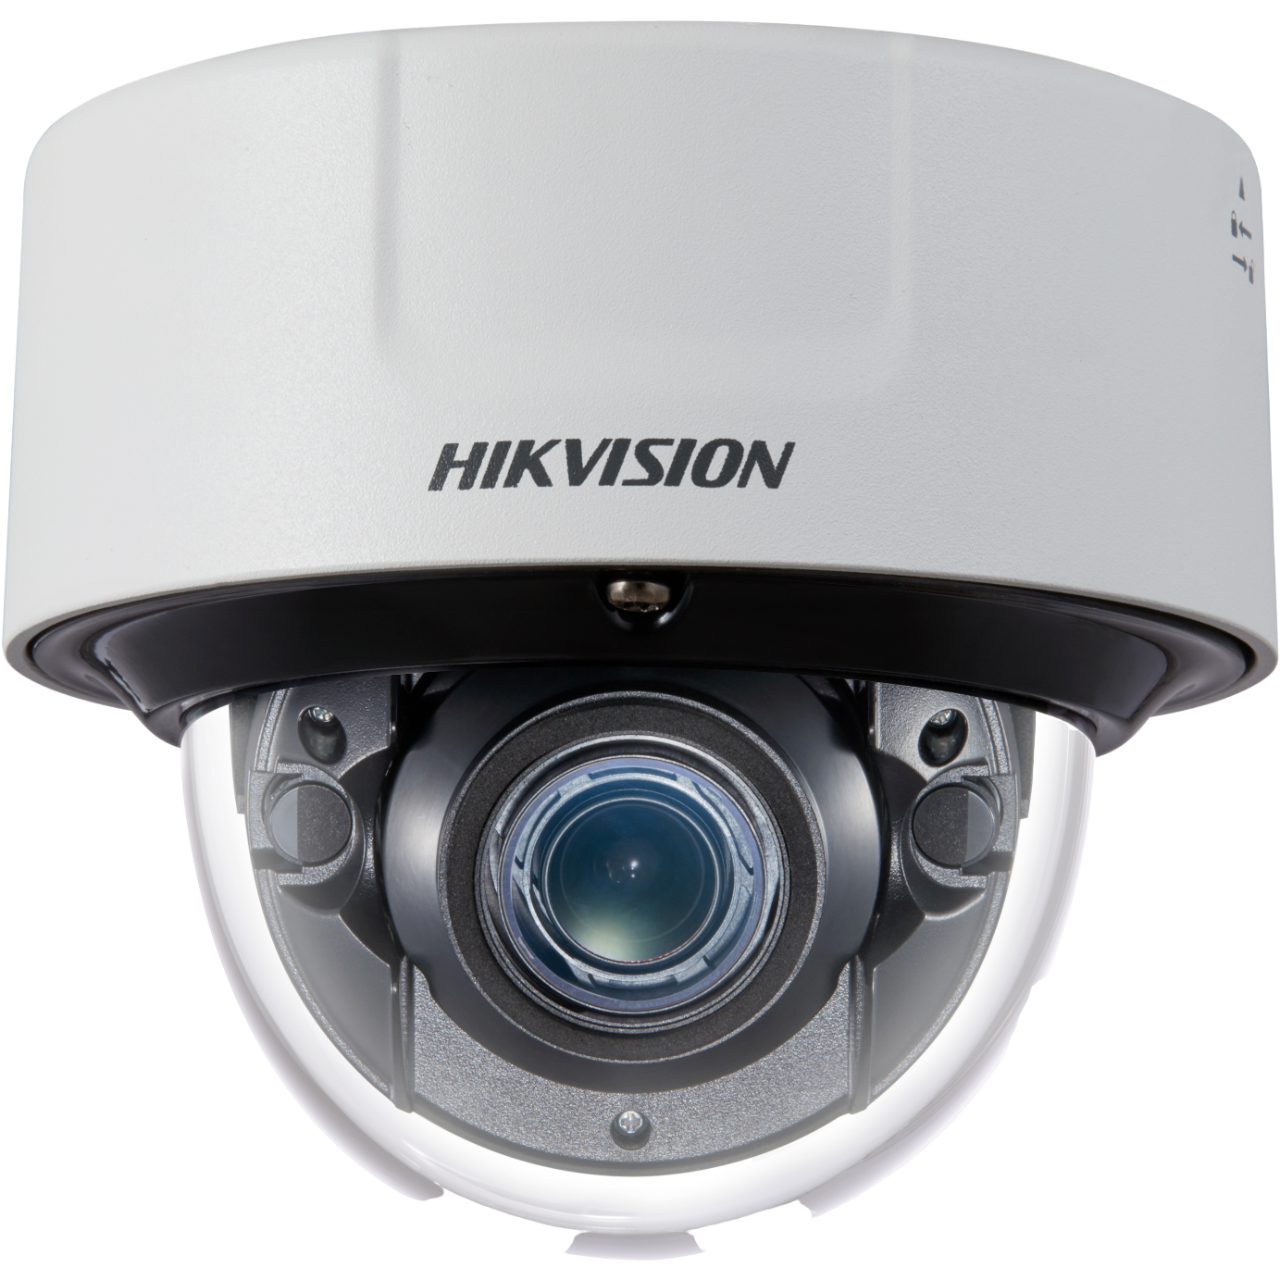 Hikvision - Network surveillance